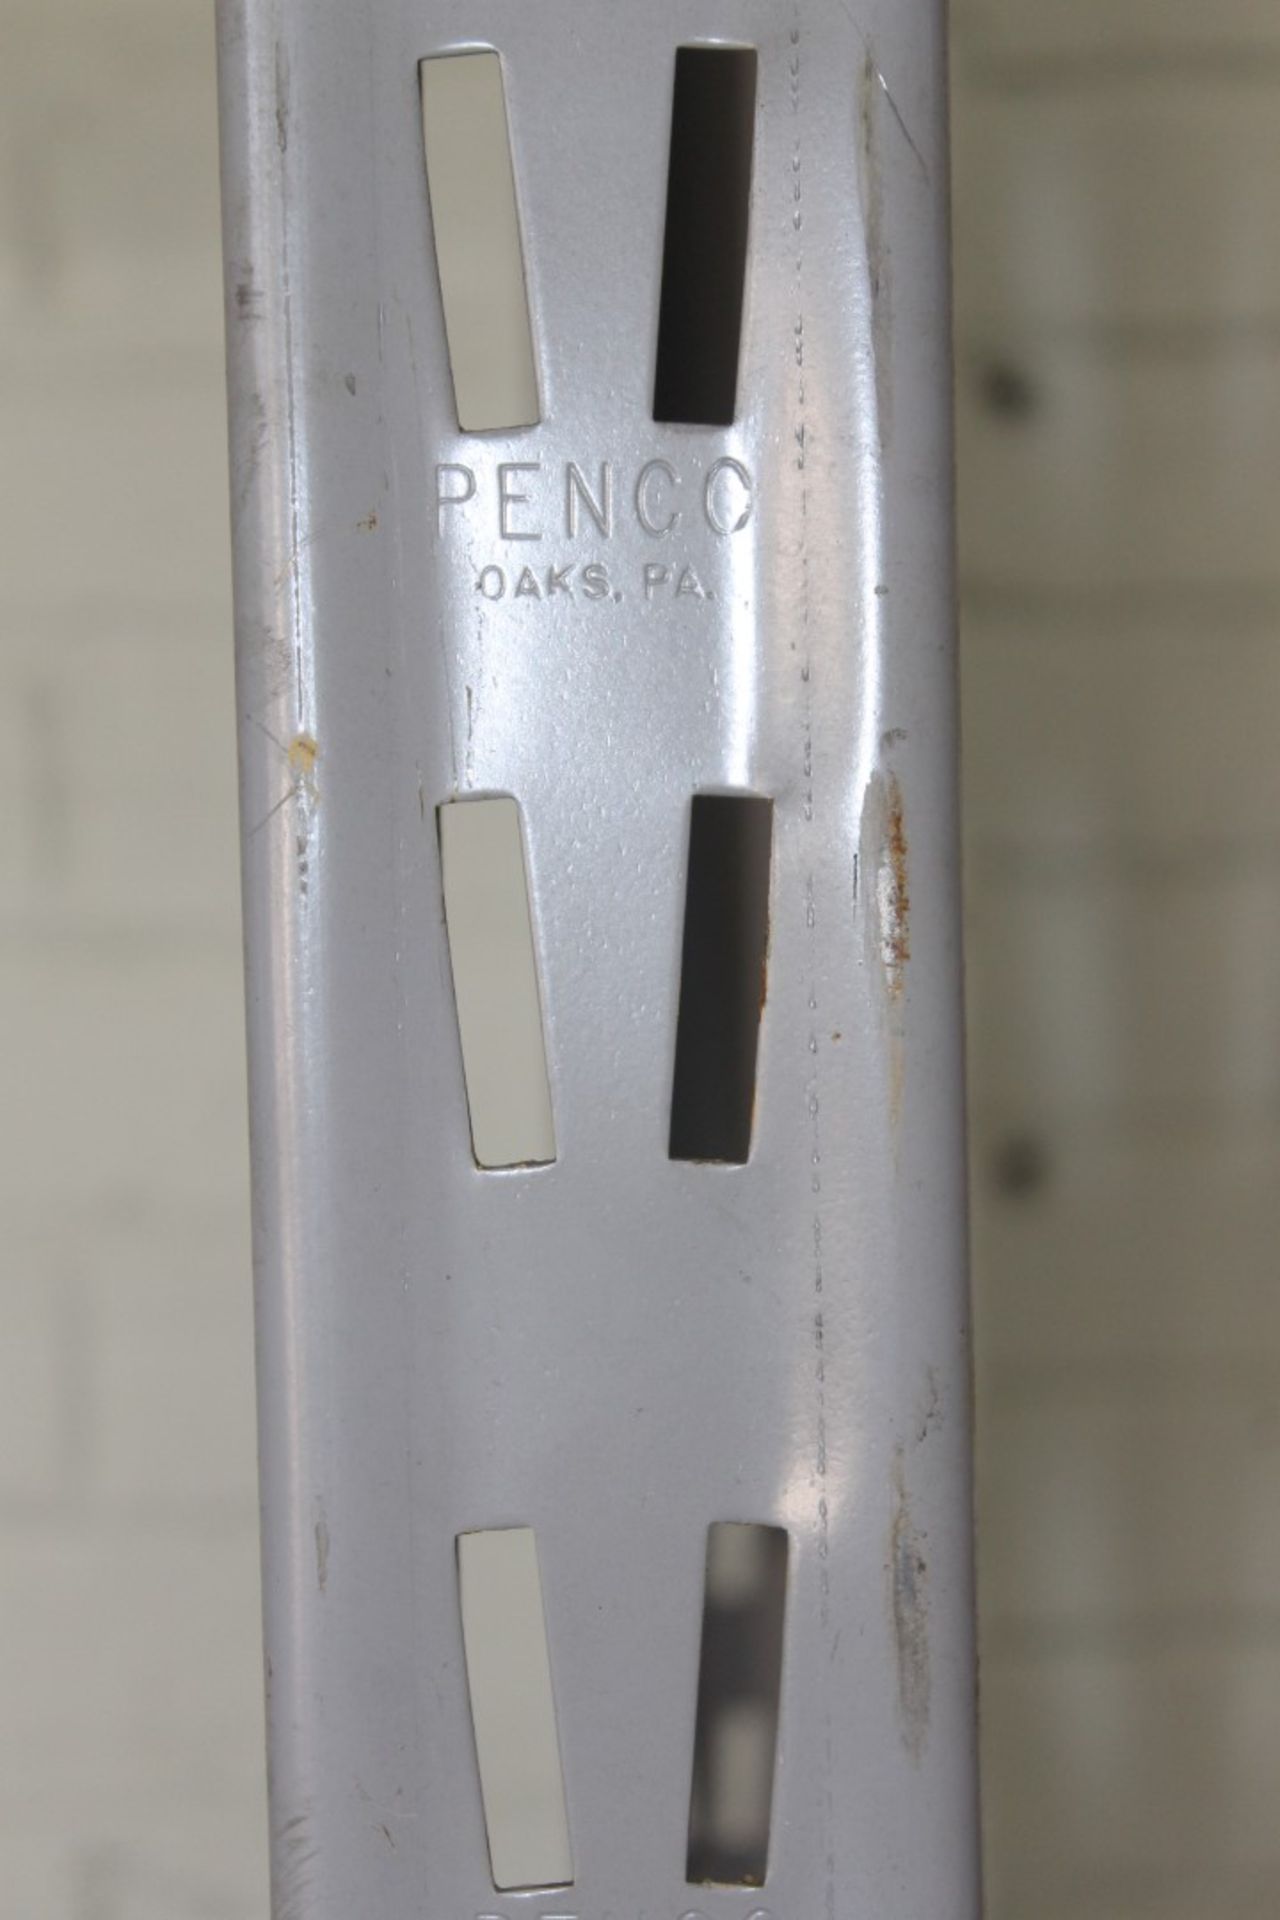 10 BAYS OF 12'H X 36"D X 106"W PENCO STYLE PALLET RACK, (4 BEAM LEVEL) - Image 3 of 4